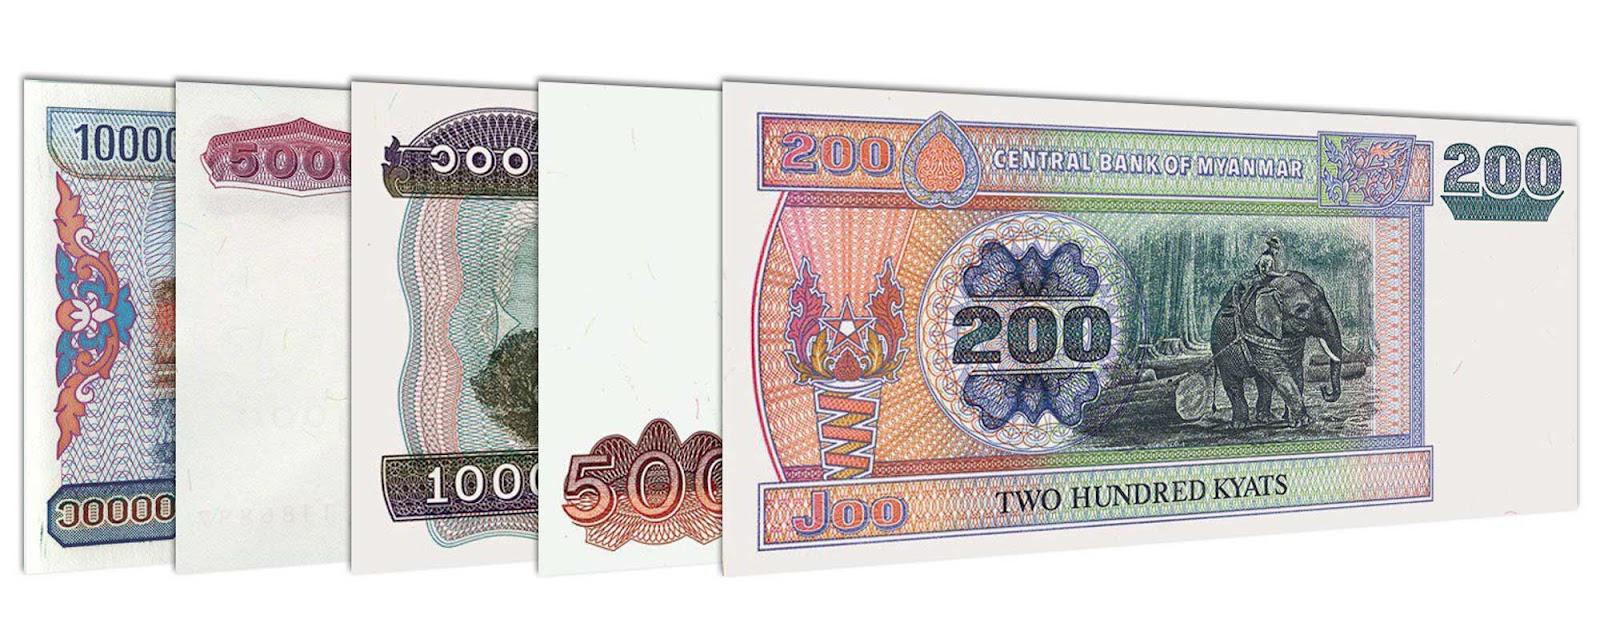 Myanmar kyat banknote series